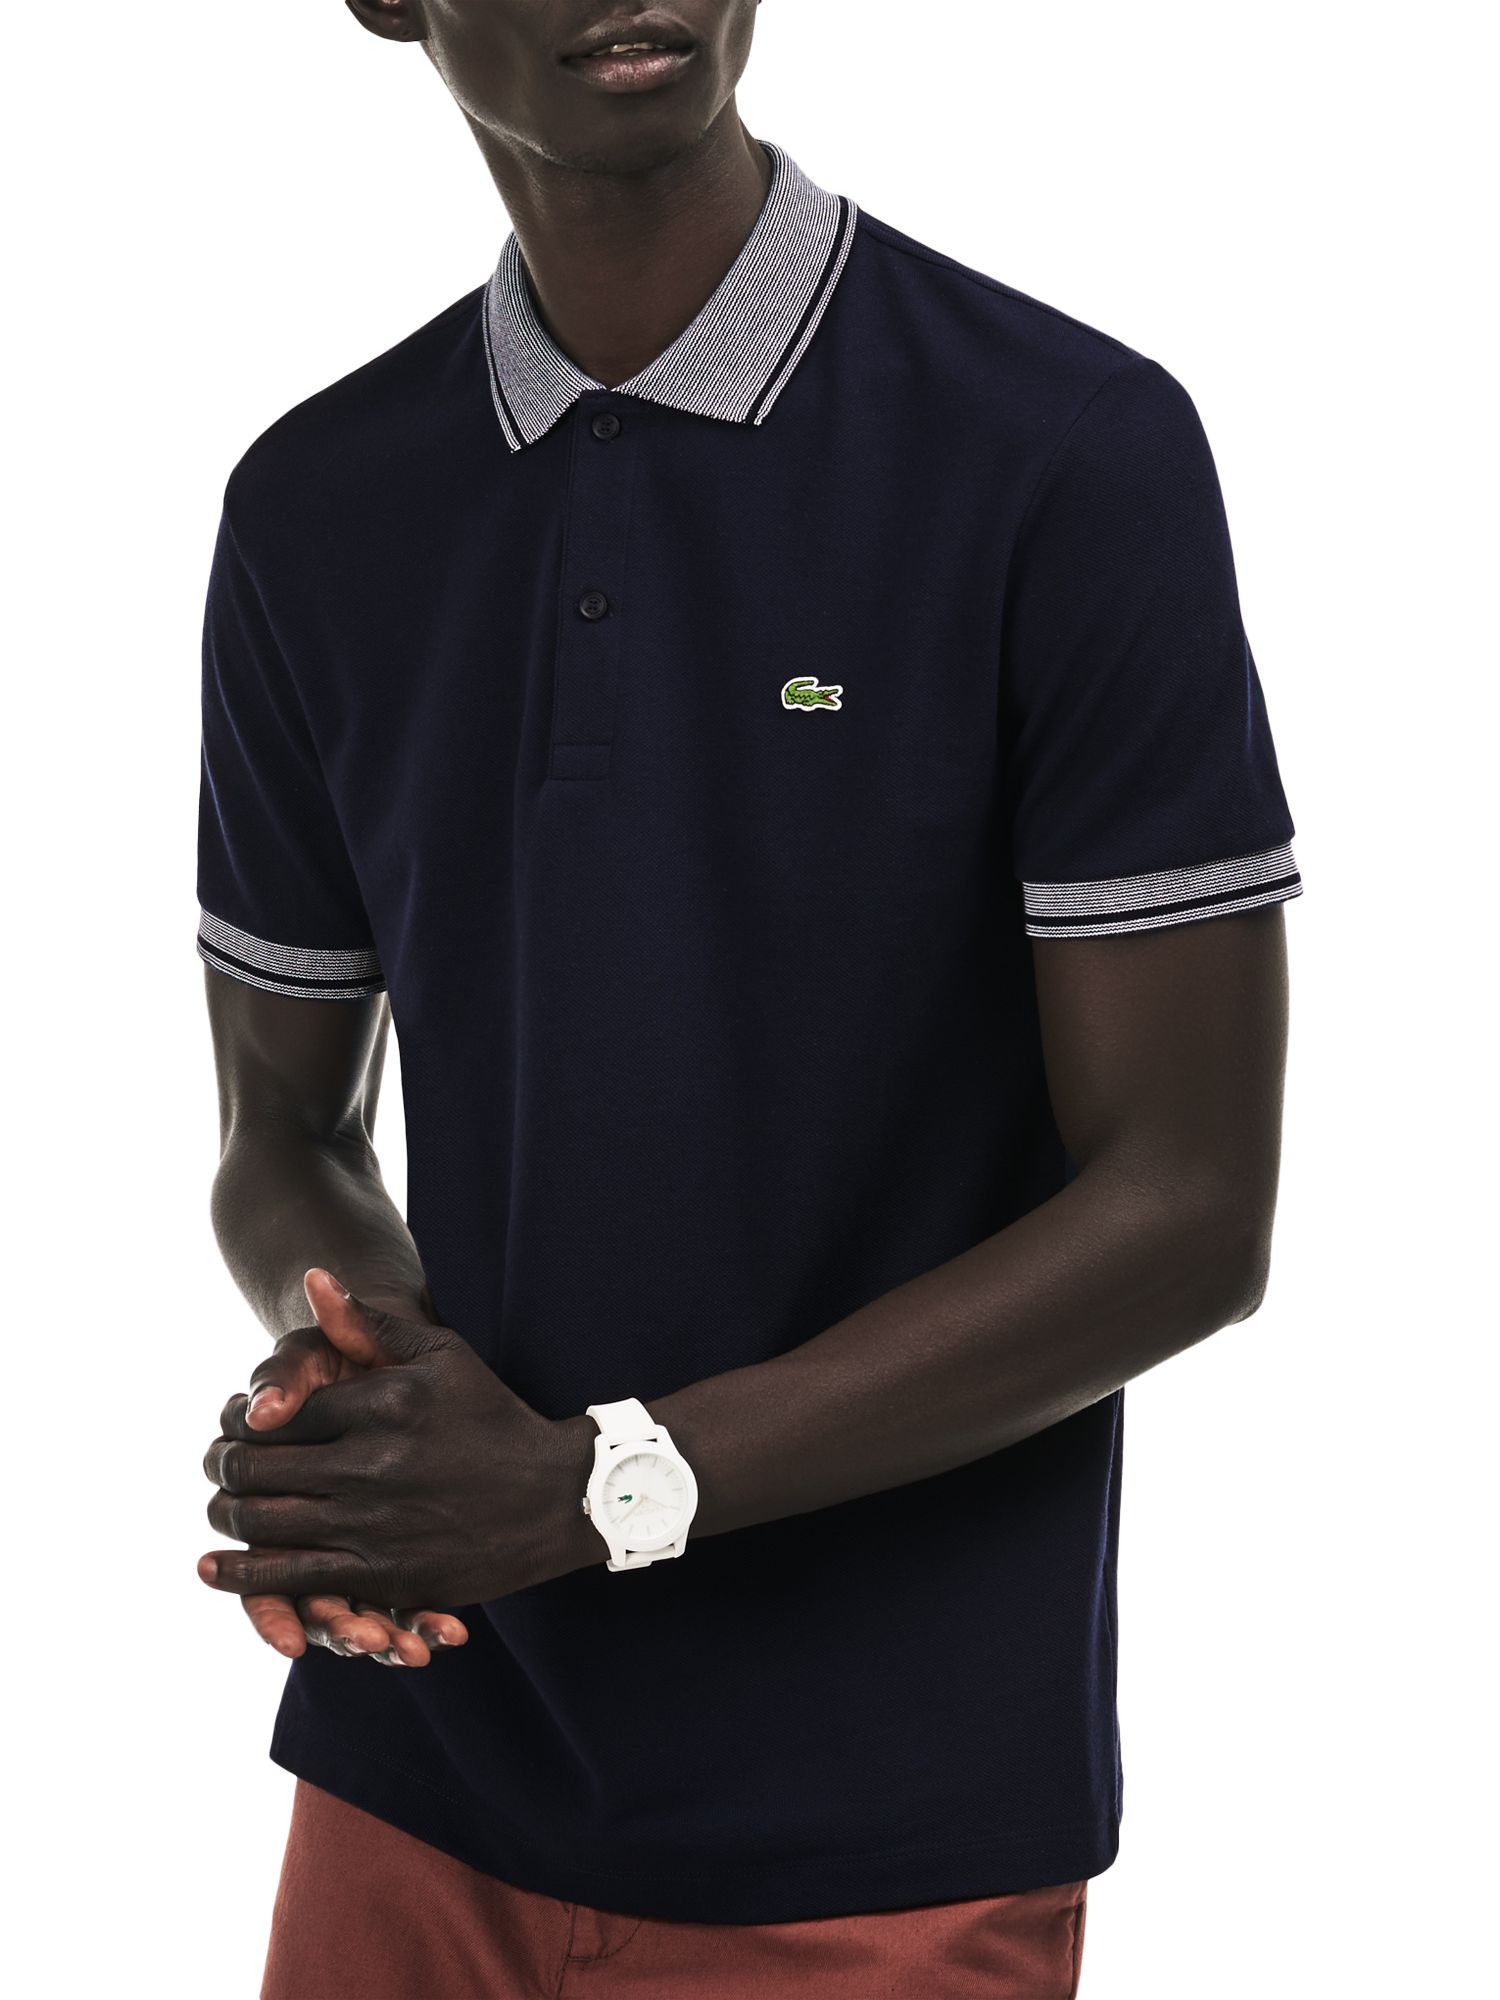 Lacoste Regular Fit Woven Collar Short Sleeve Polo Shirt, Navy/White, XL